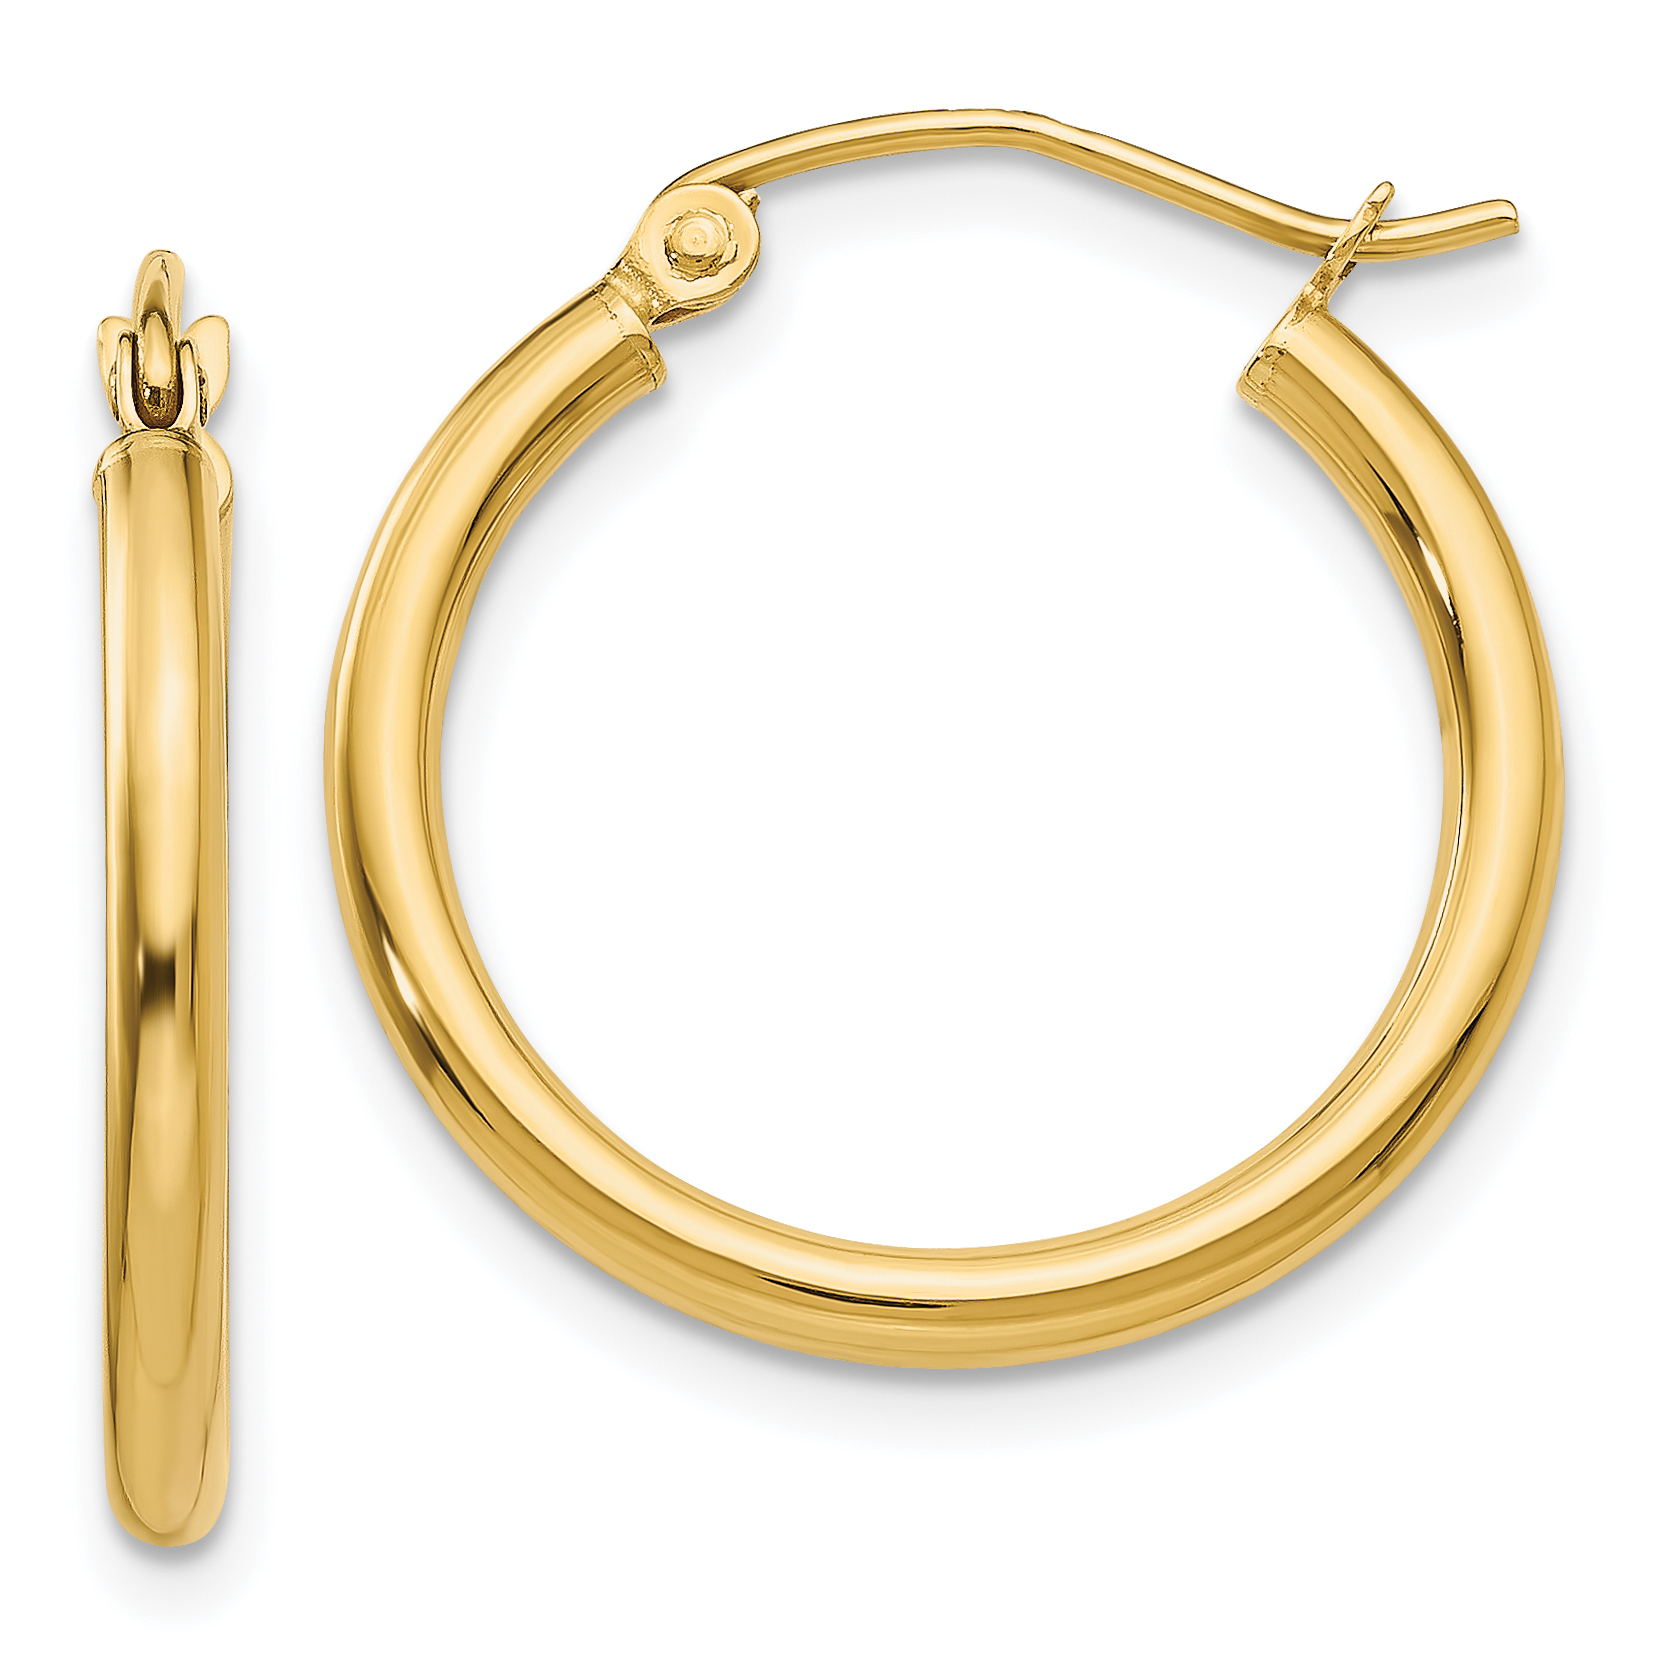 Goldia 14k Polished Round Endless 2mm Hoop Earrings